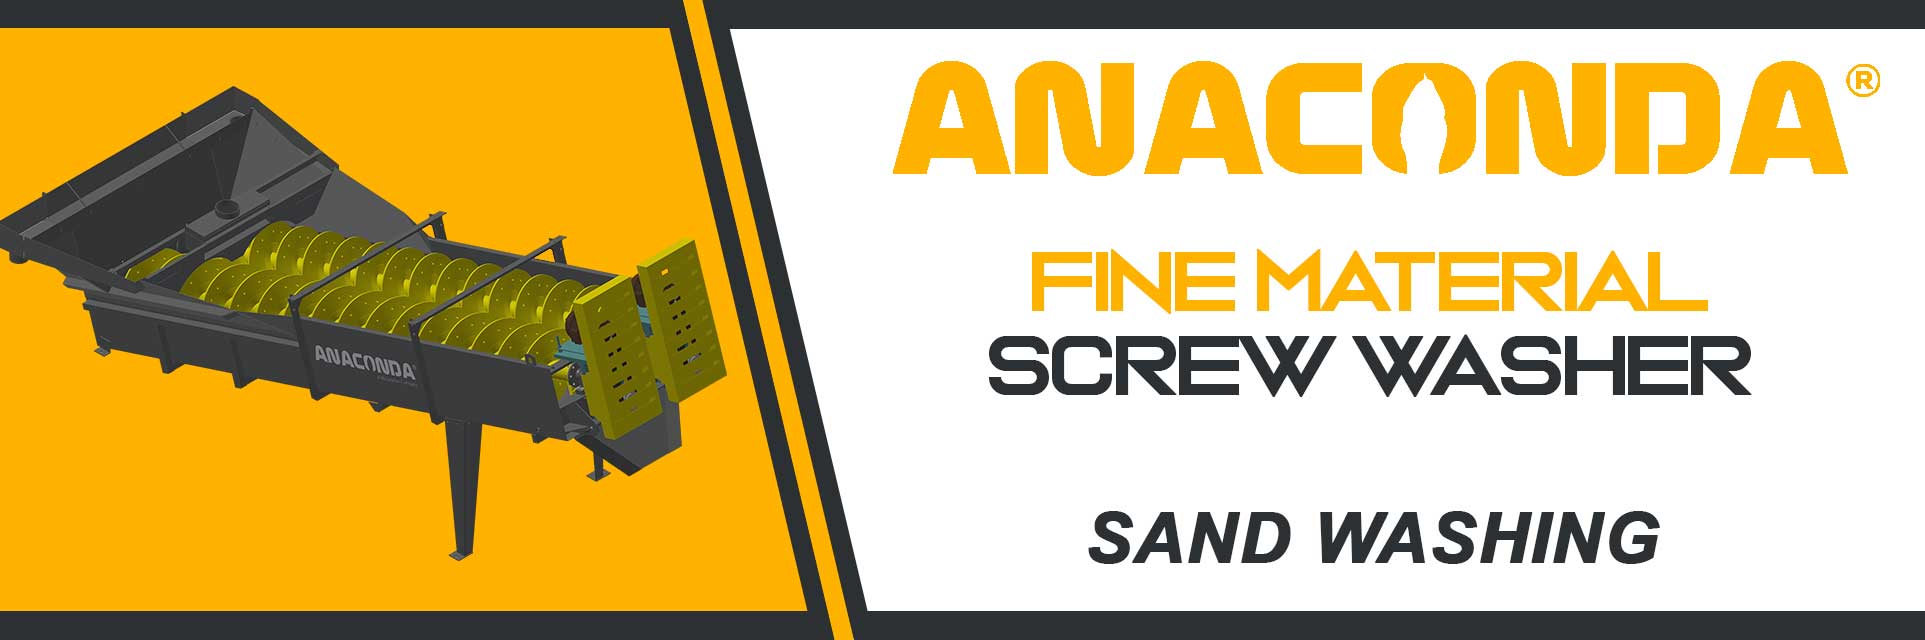 Anaconda Equipment Fine Material Screw Washer for Sand Washing